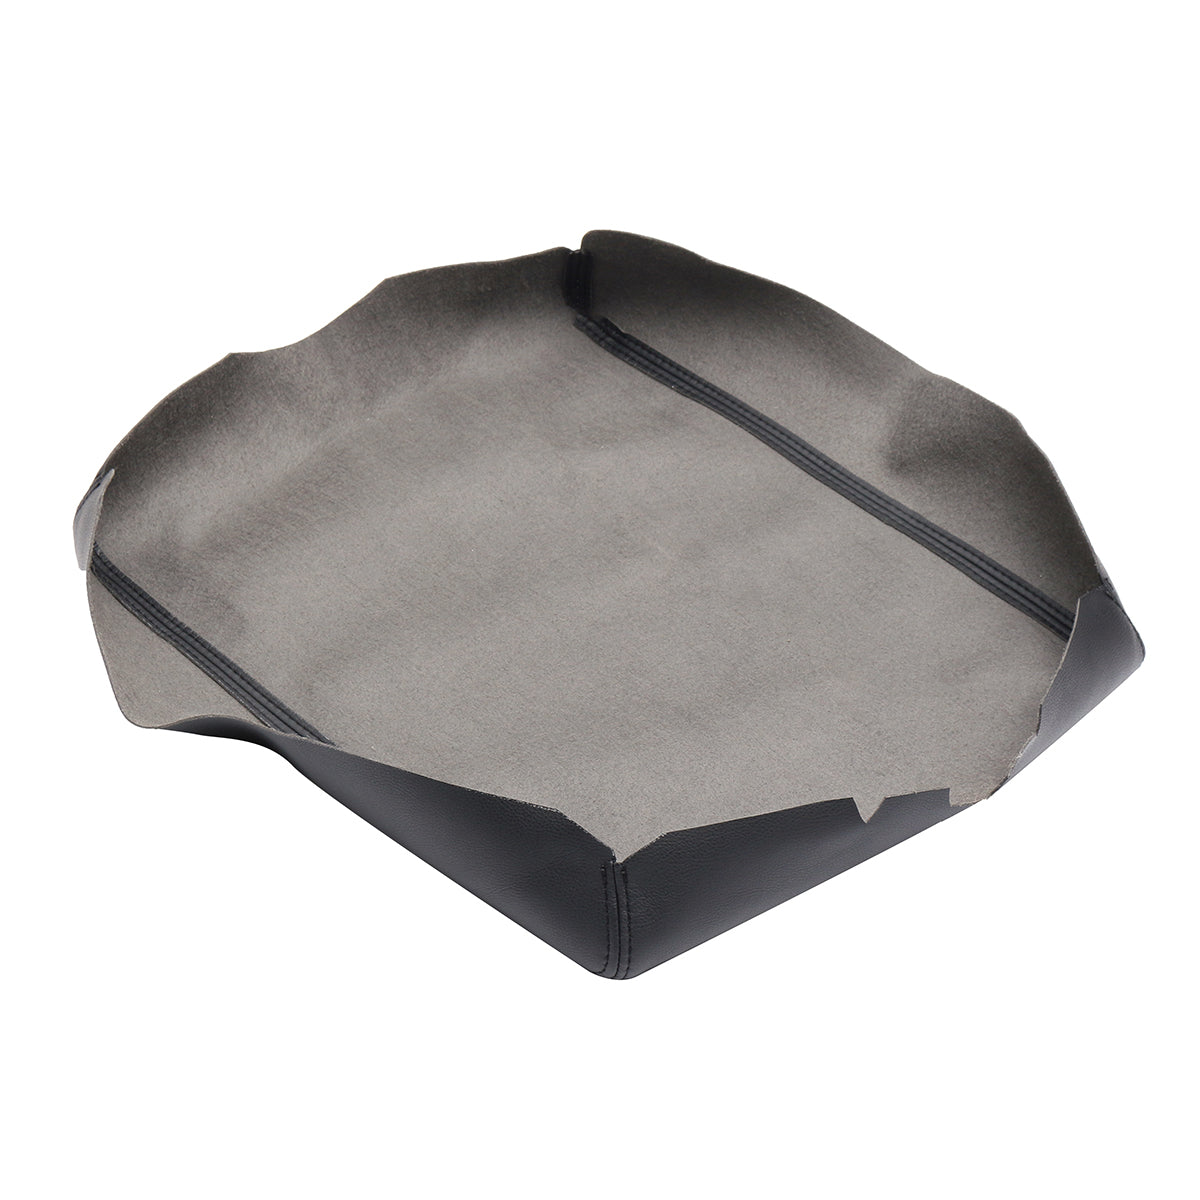 PU Leather Car Console Center Arm Rest Cover Cushion for Nissan Titan 2004-2014 - Auto GoShop